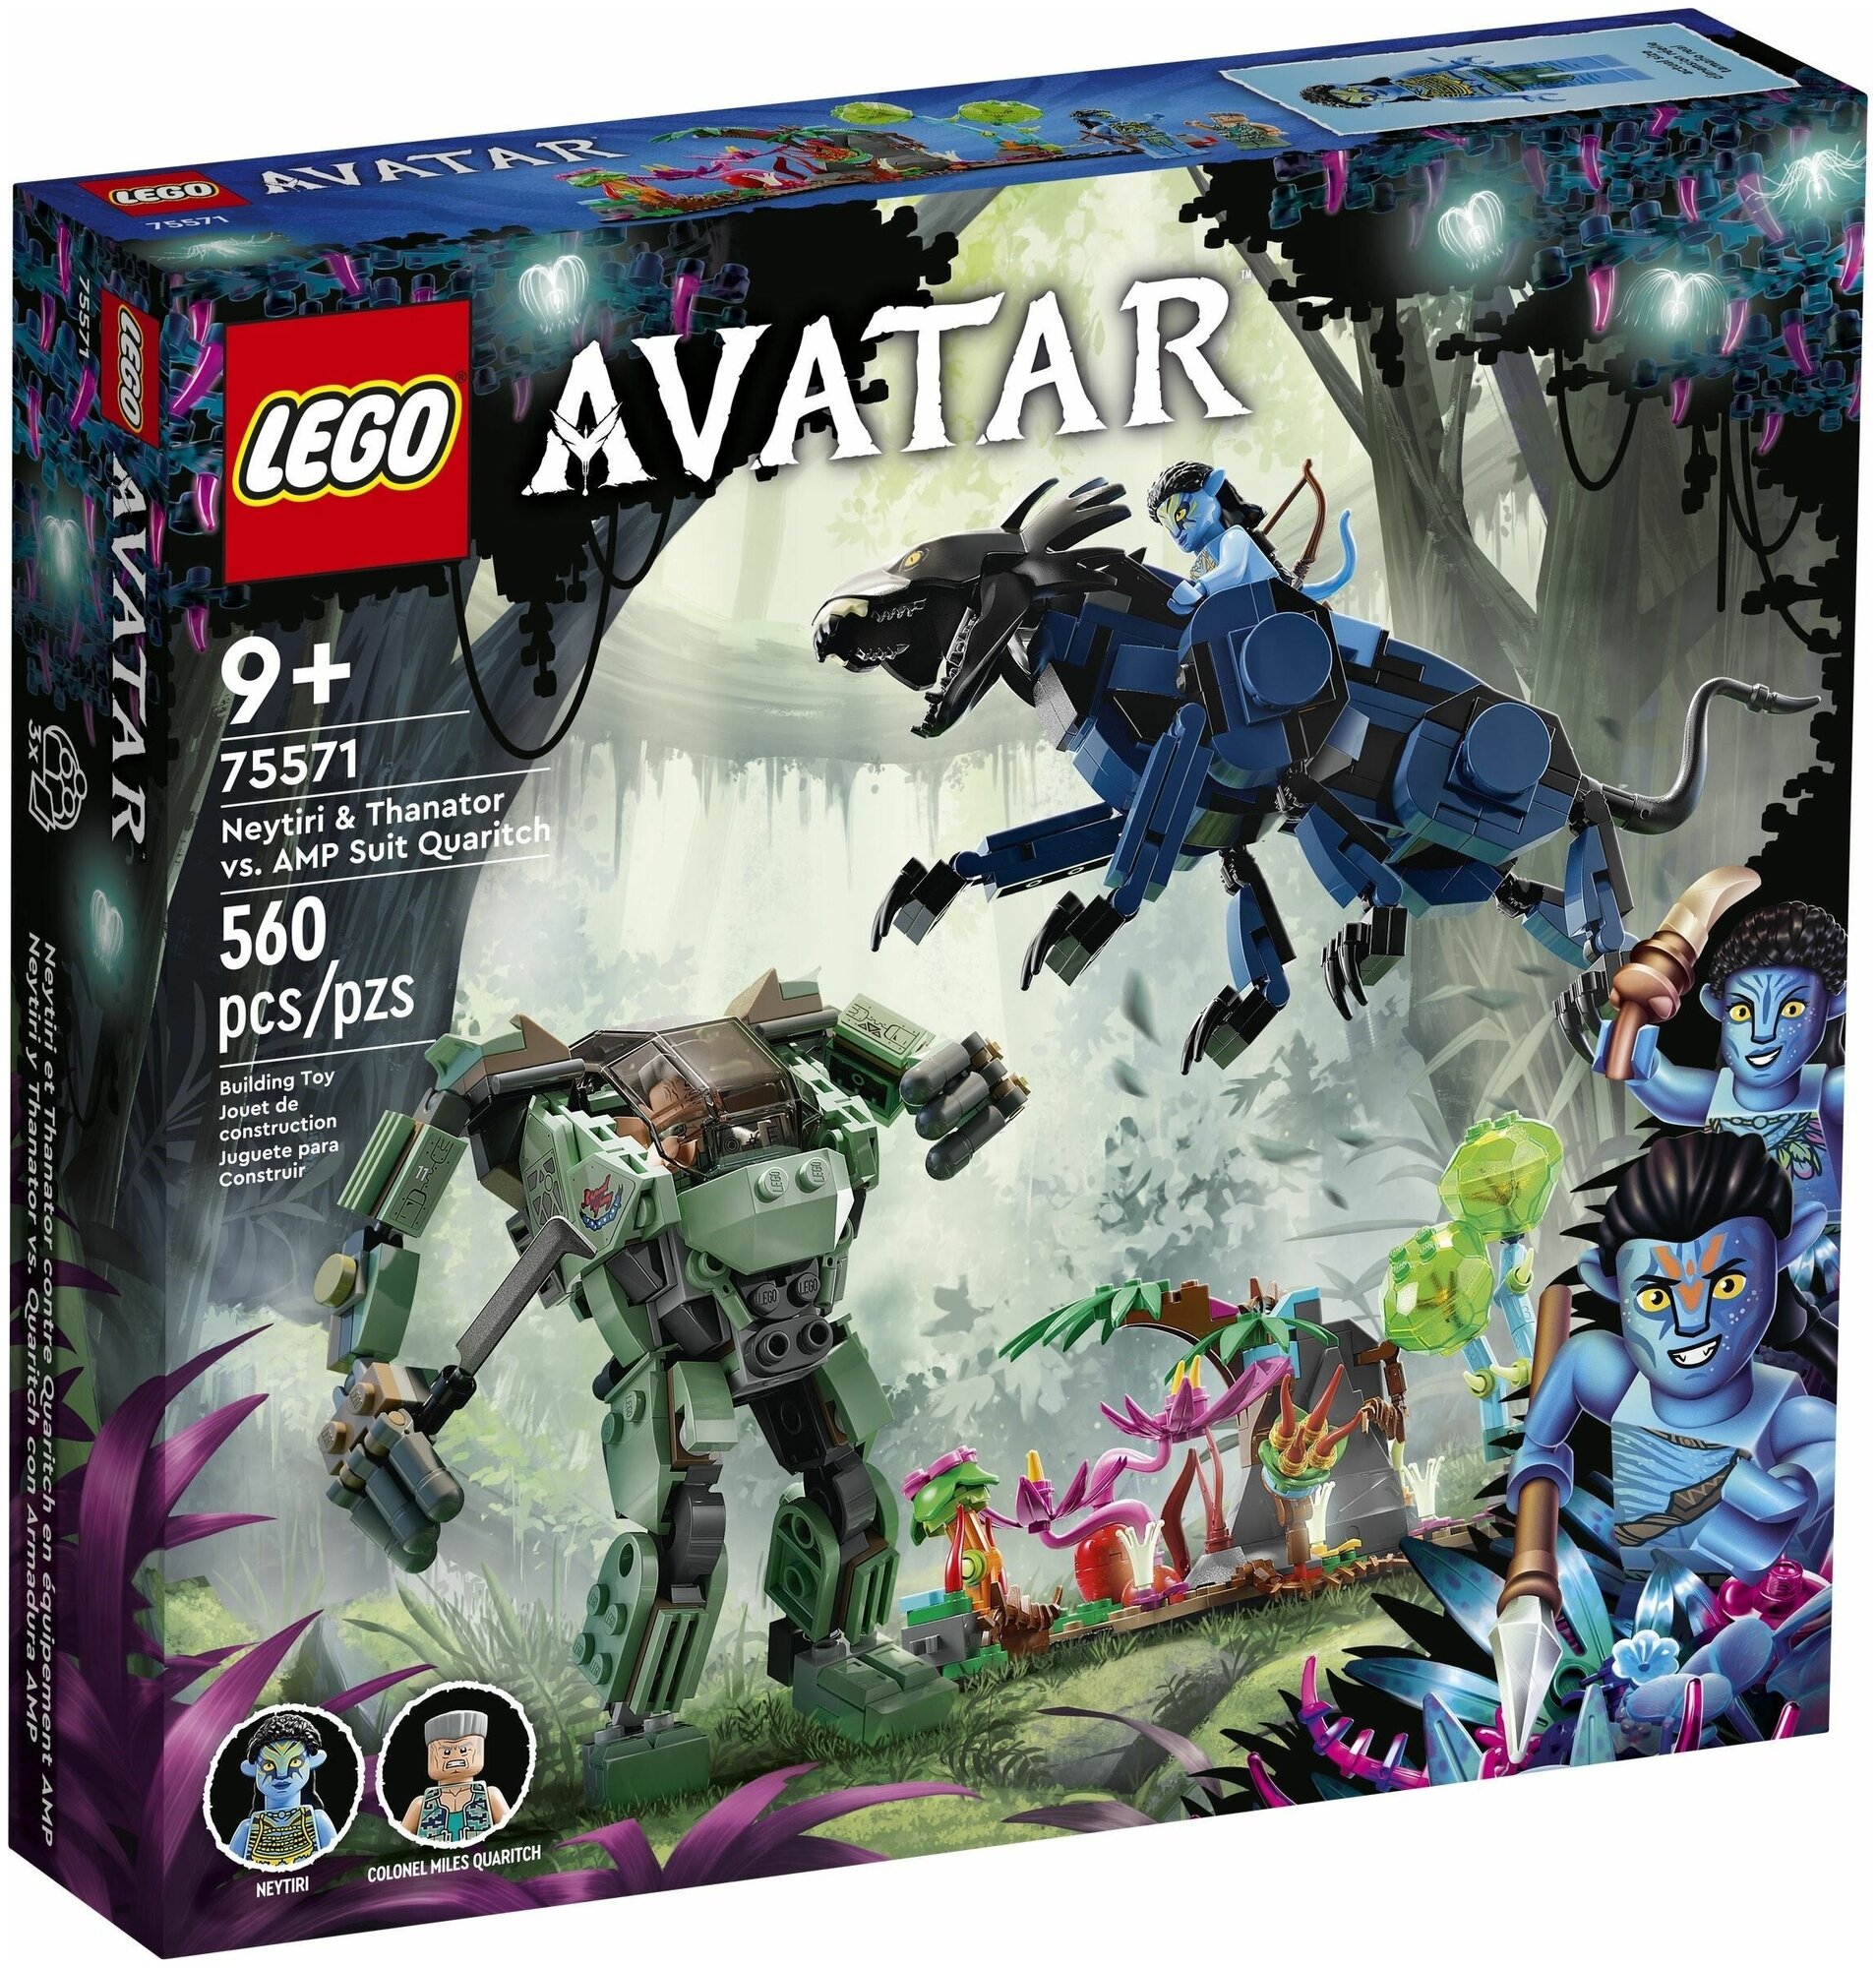 LEGO Avatar 75571, Neytiri & Thanator vs. AMP Suit Quaritch 75571